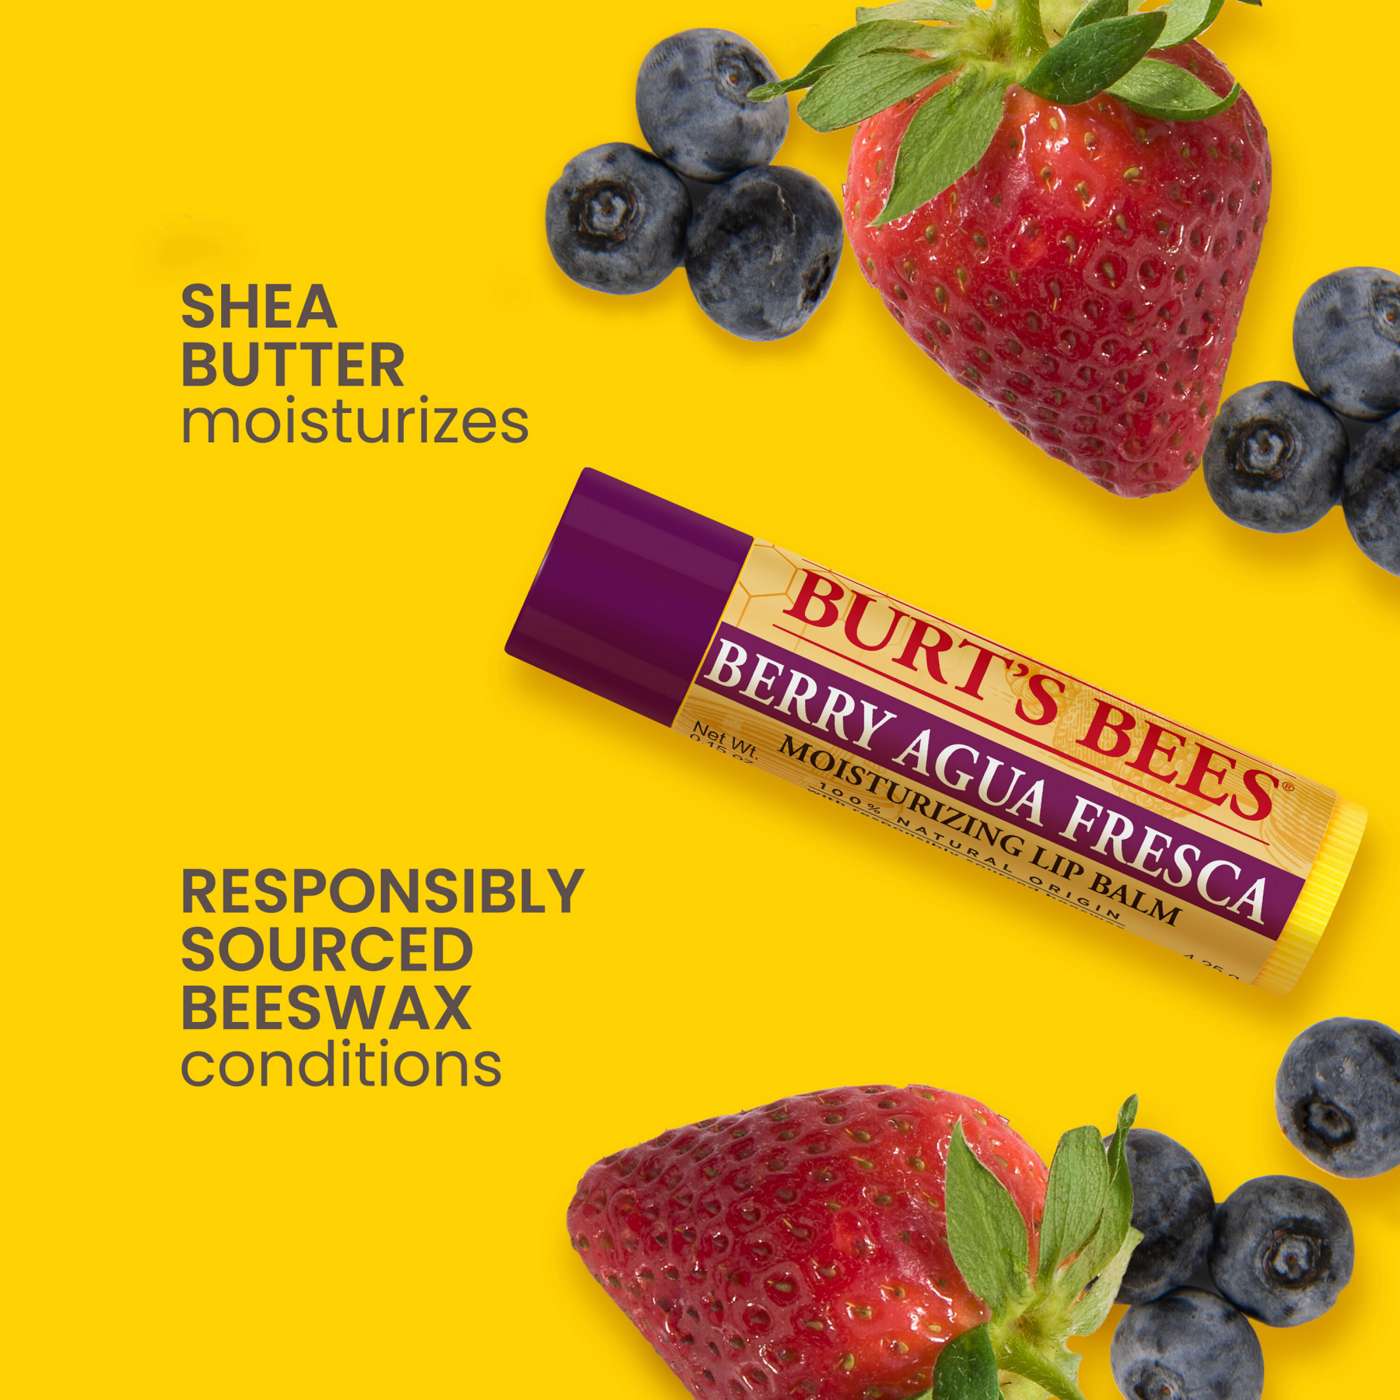 Burt's Bees 100% Natural Origin Moisturizing Lip Balm - Berry Agua Fresca; image 11 of 11